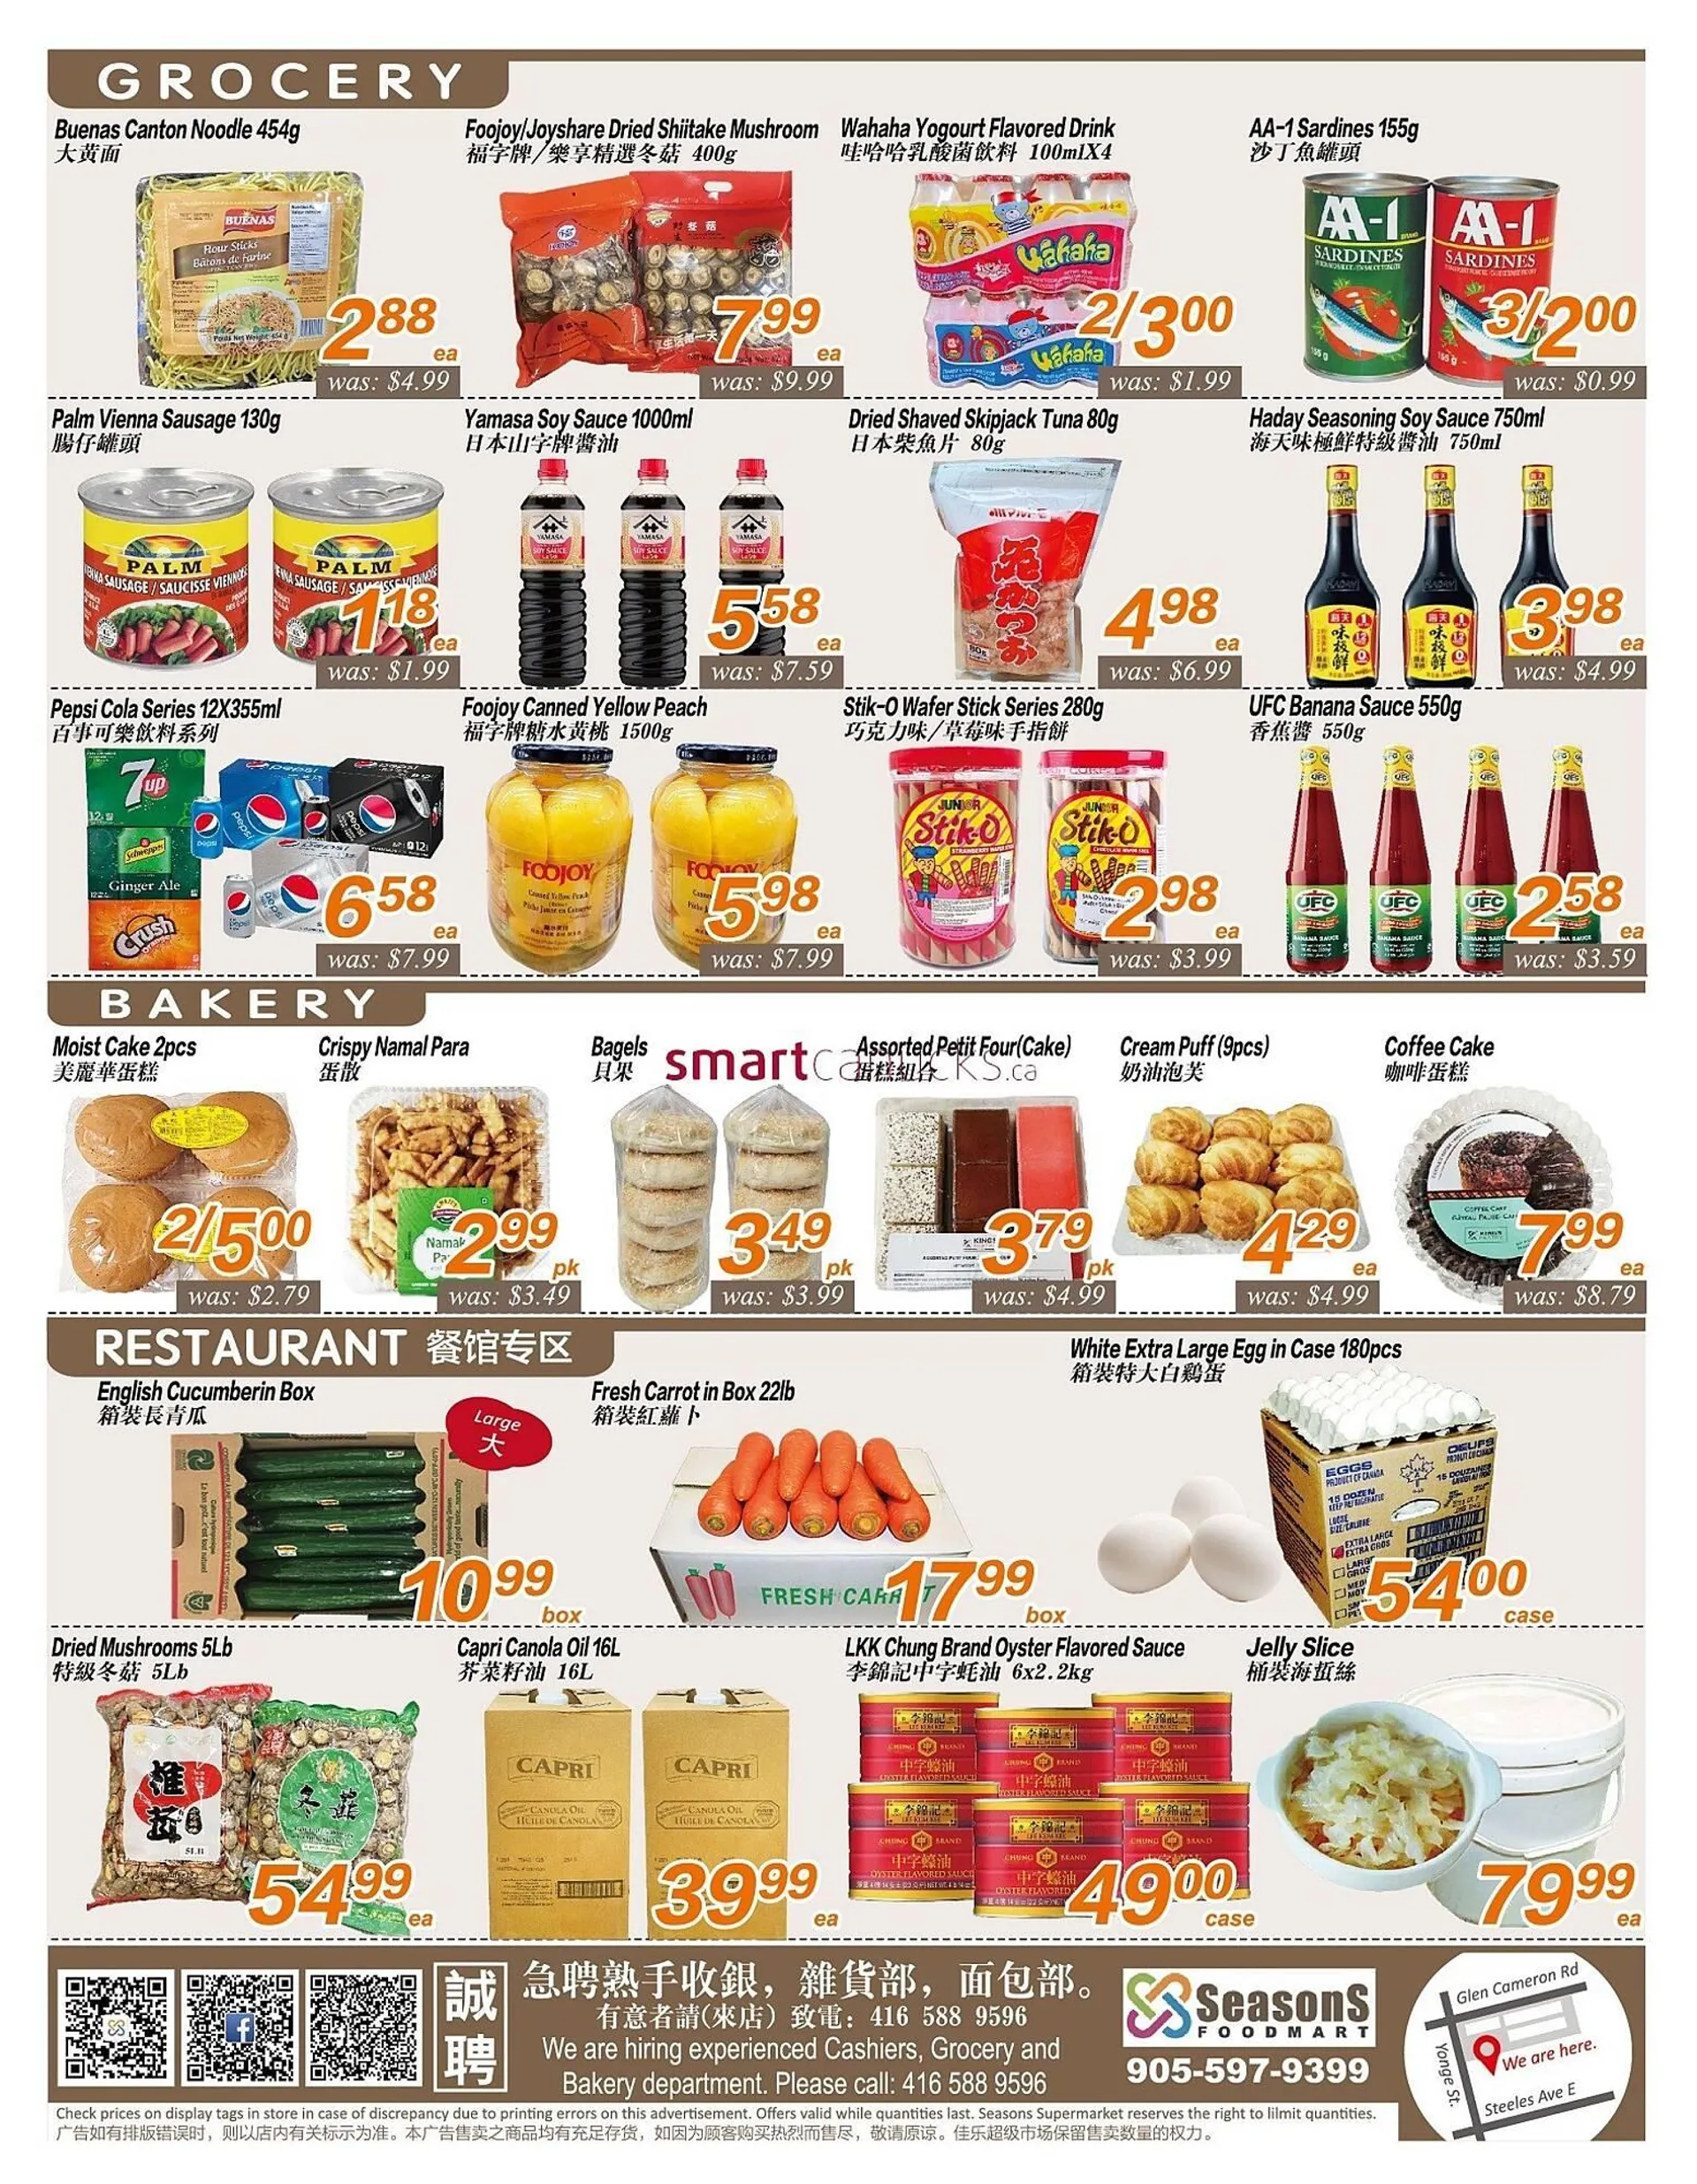 Seasons Foodmart flyer - 4